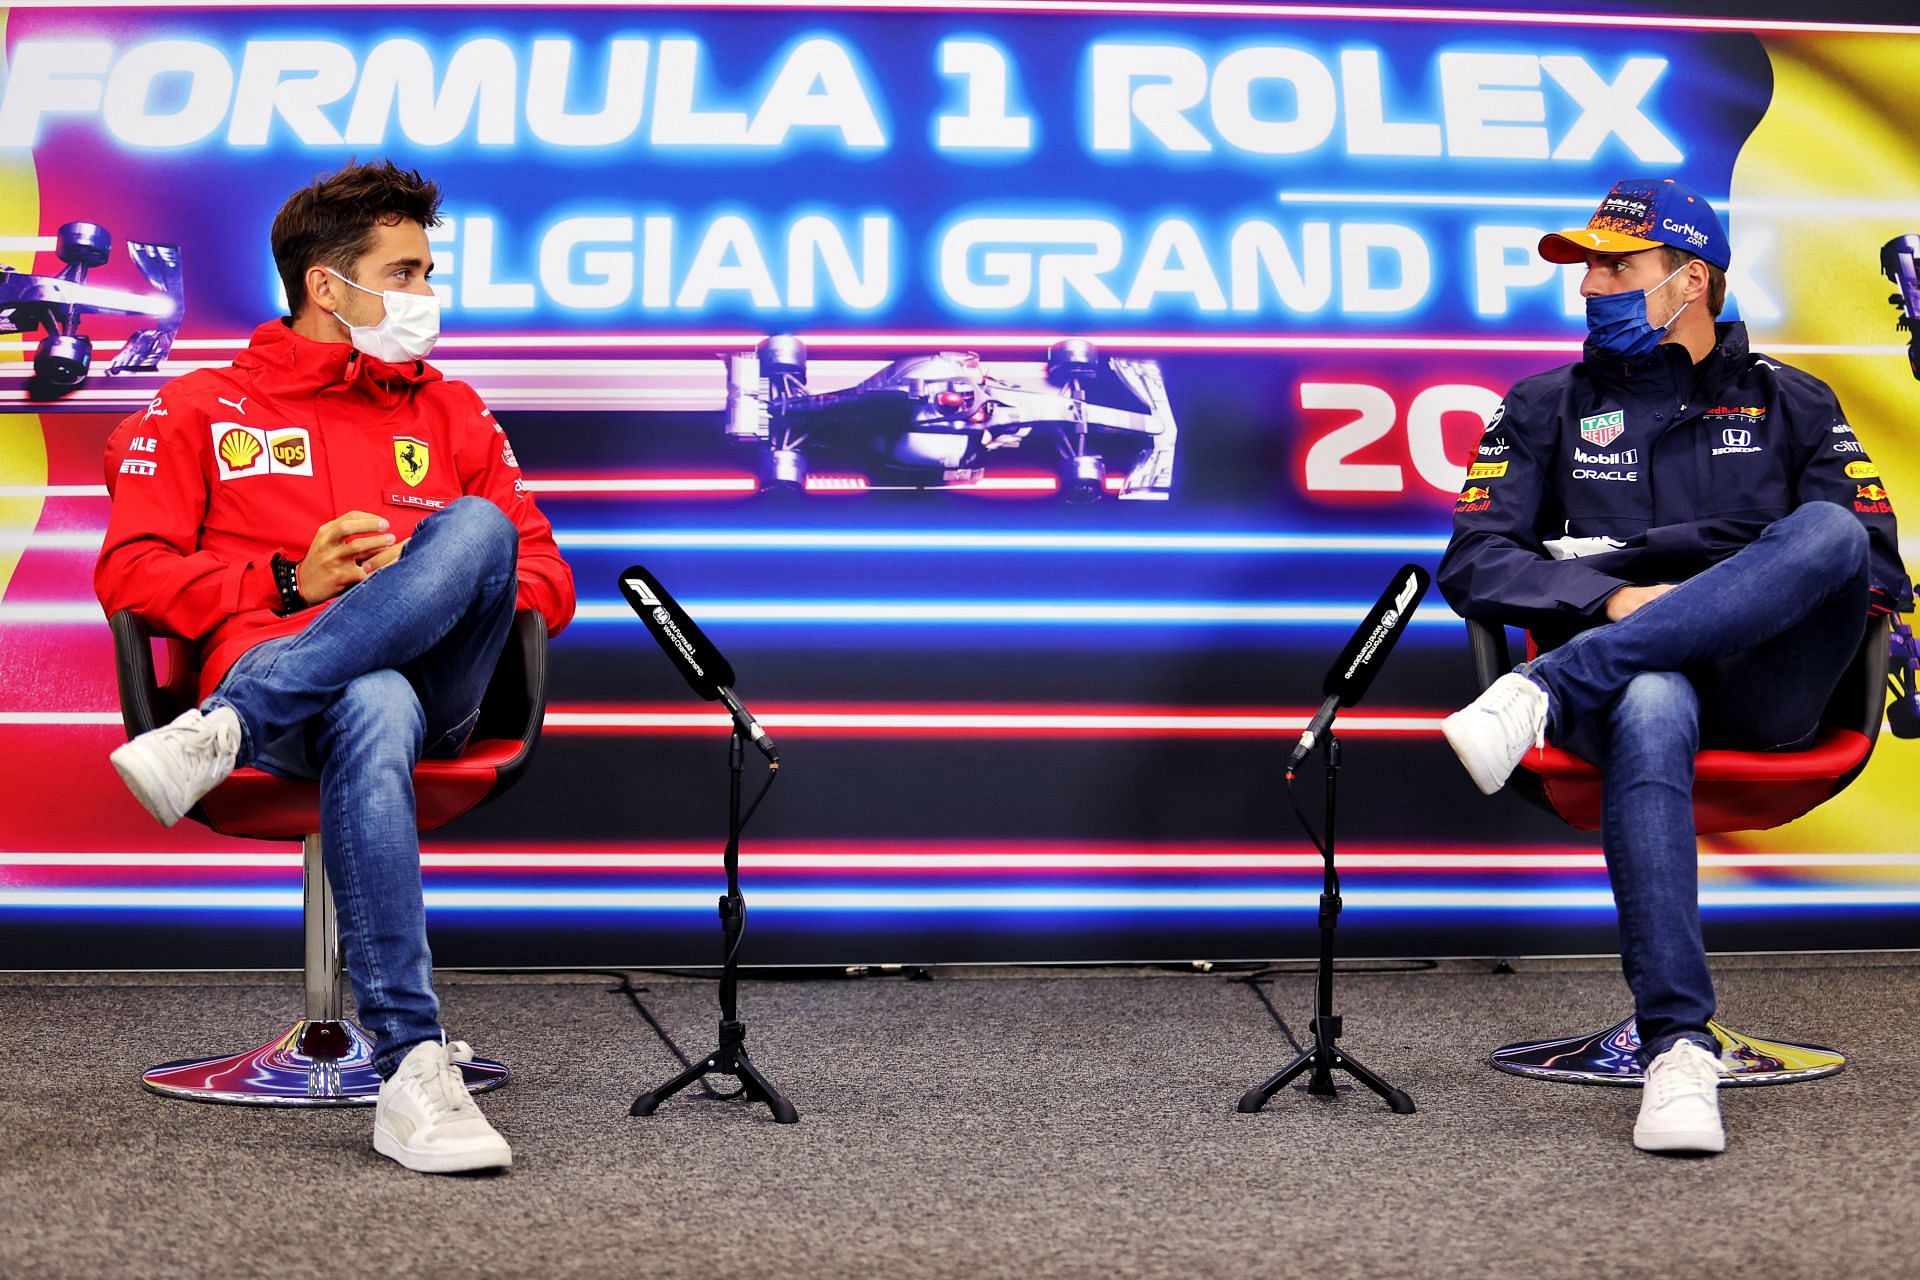 F1 Grand Prix of Belgium - Previews - Charles Leclerc (left) and Max Verstappen (right) in Belgium 2021